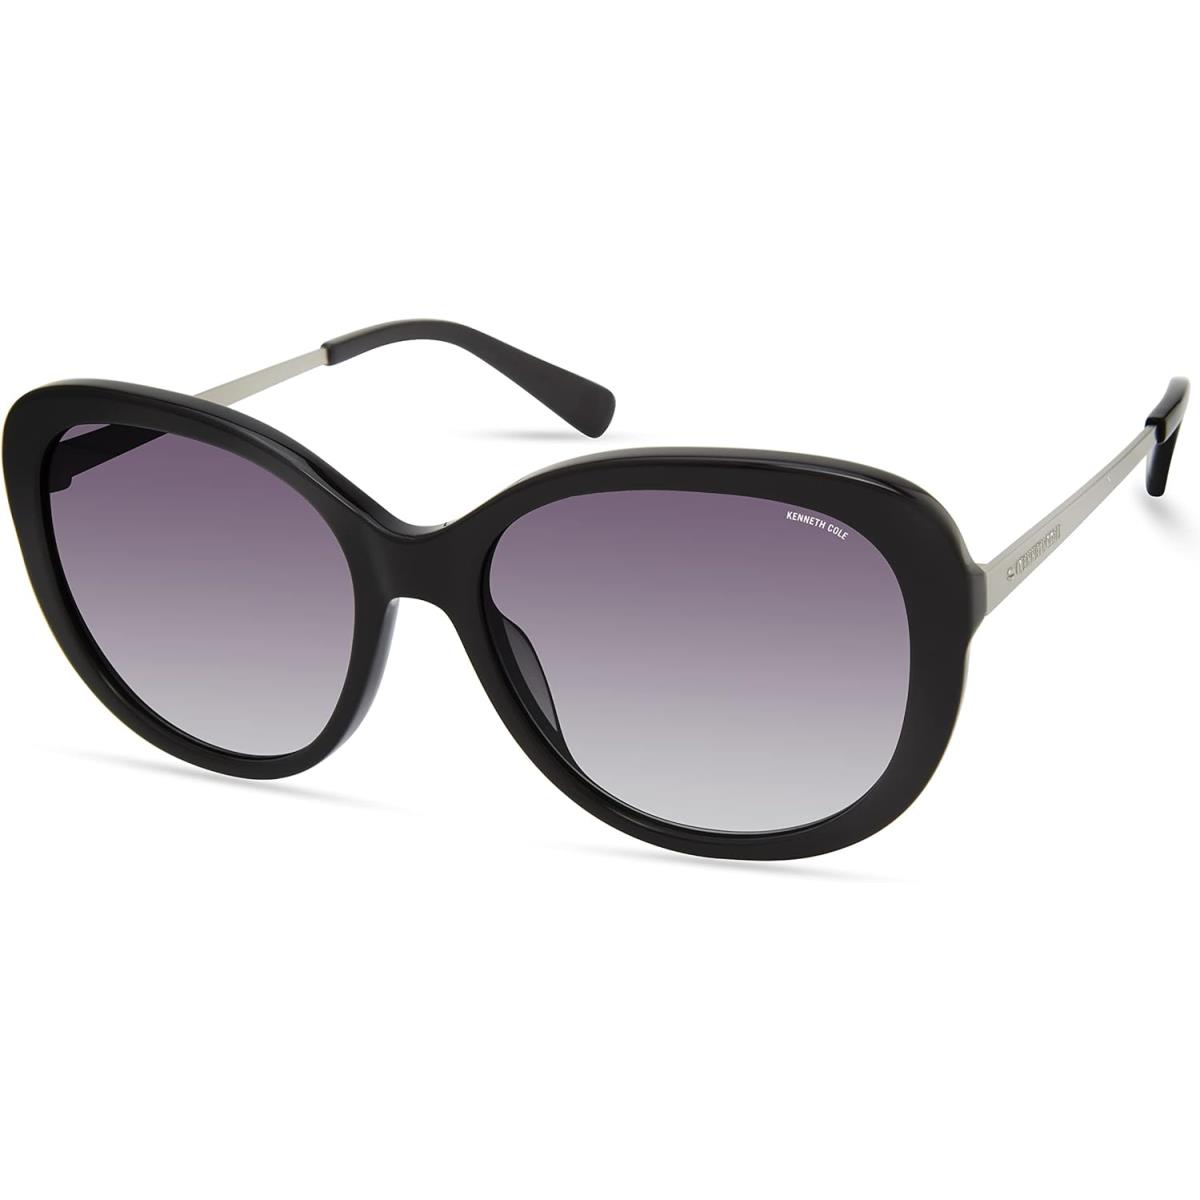 Kenneth Cole Women`s Cat Sunglasses Shiny Black / Gradient Blue